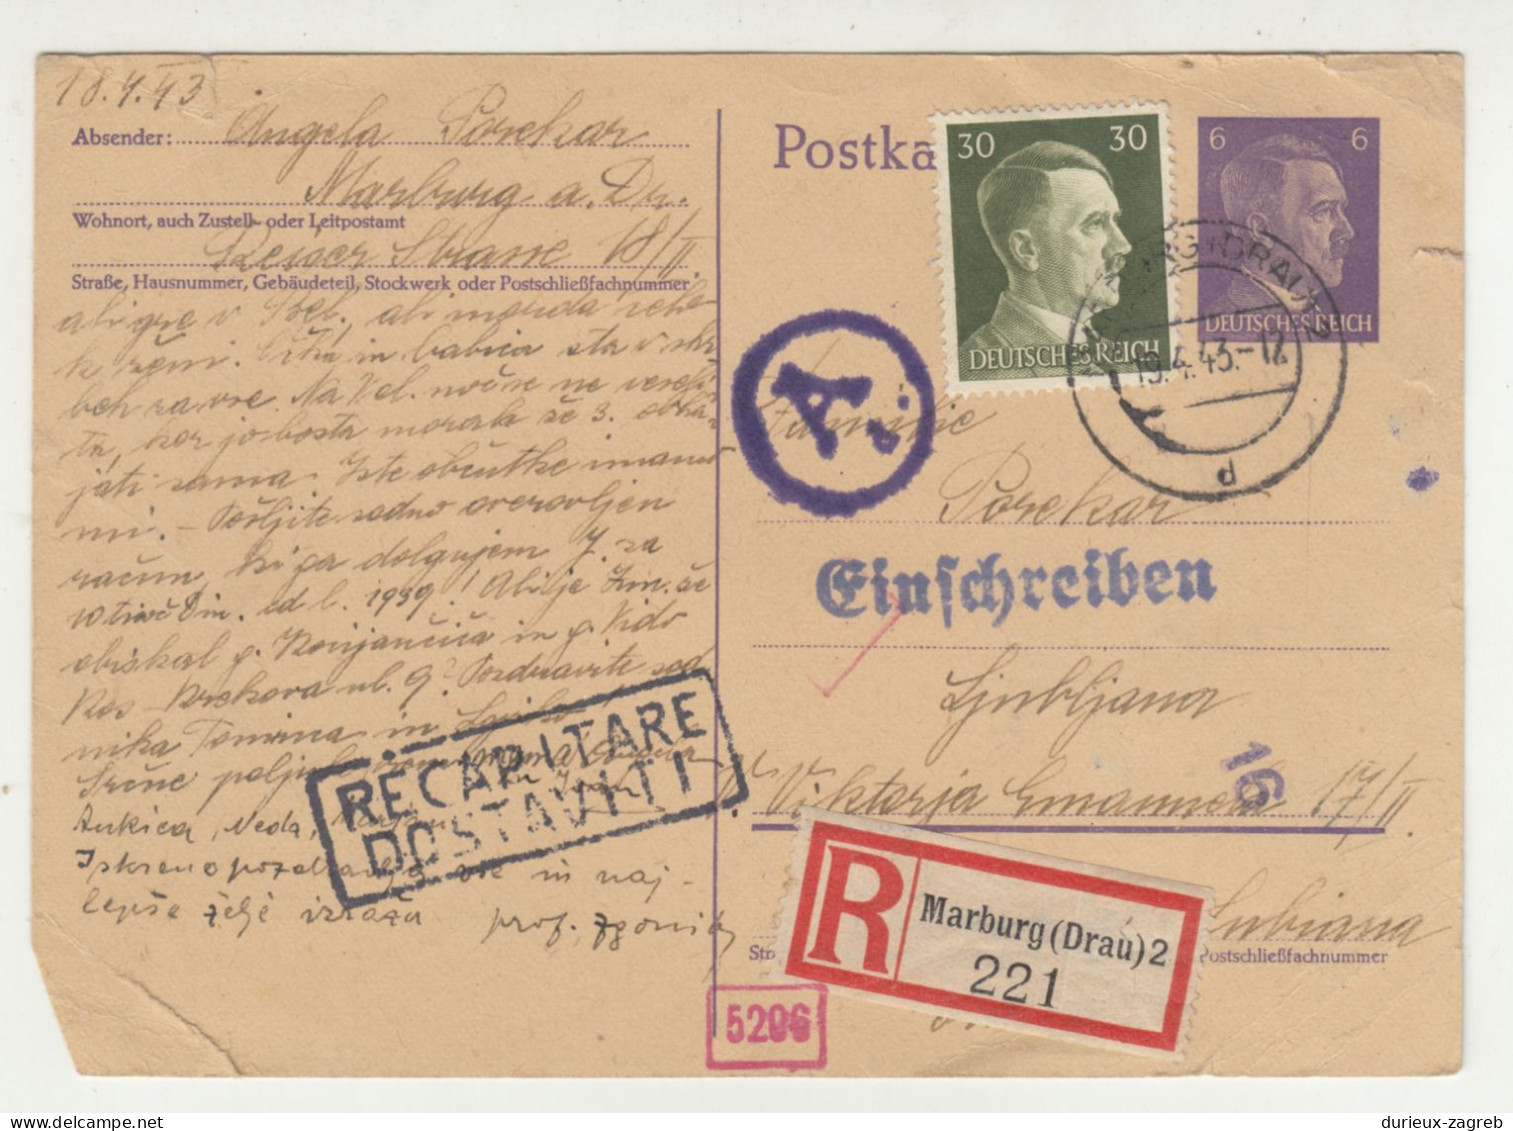 Germany Reich Postal Stationery Postcard Posted Registered 1943 Marburg A/D To Ljubljana B240503 - Eslovenia